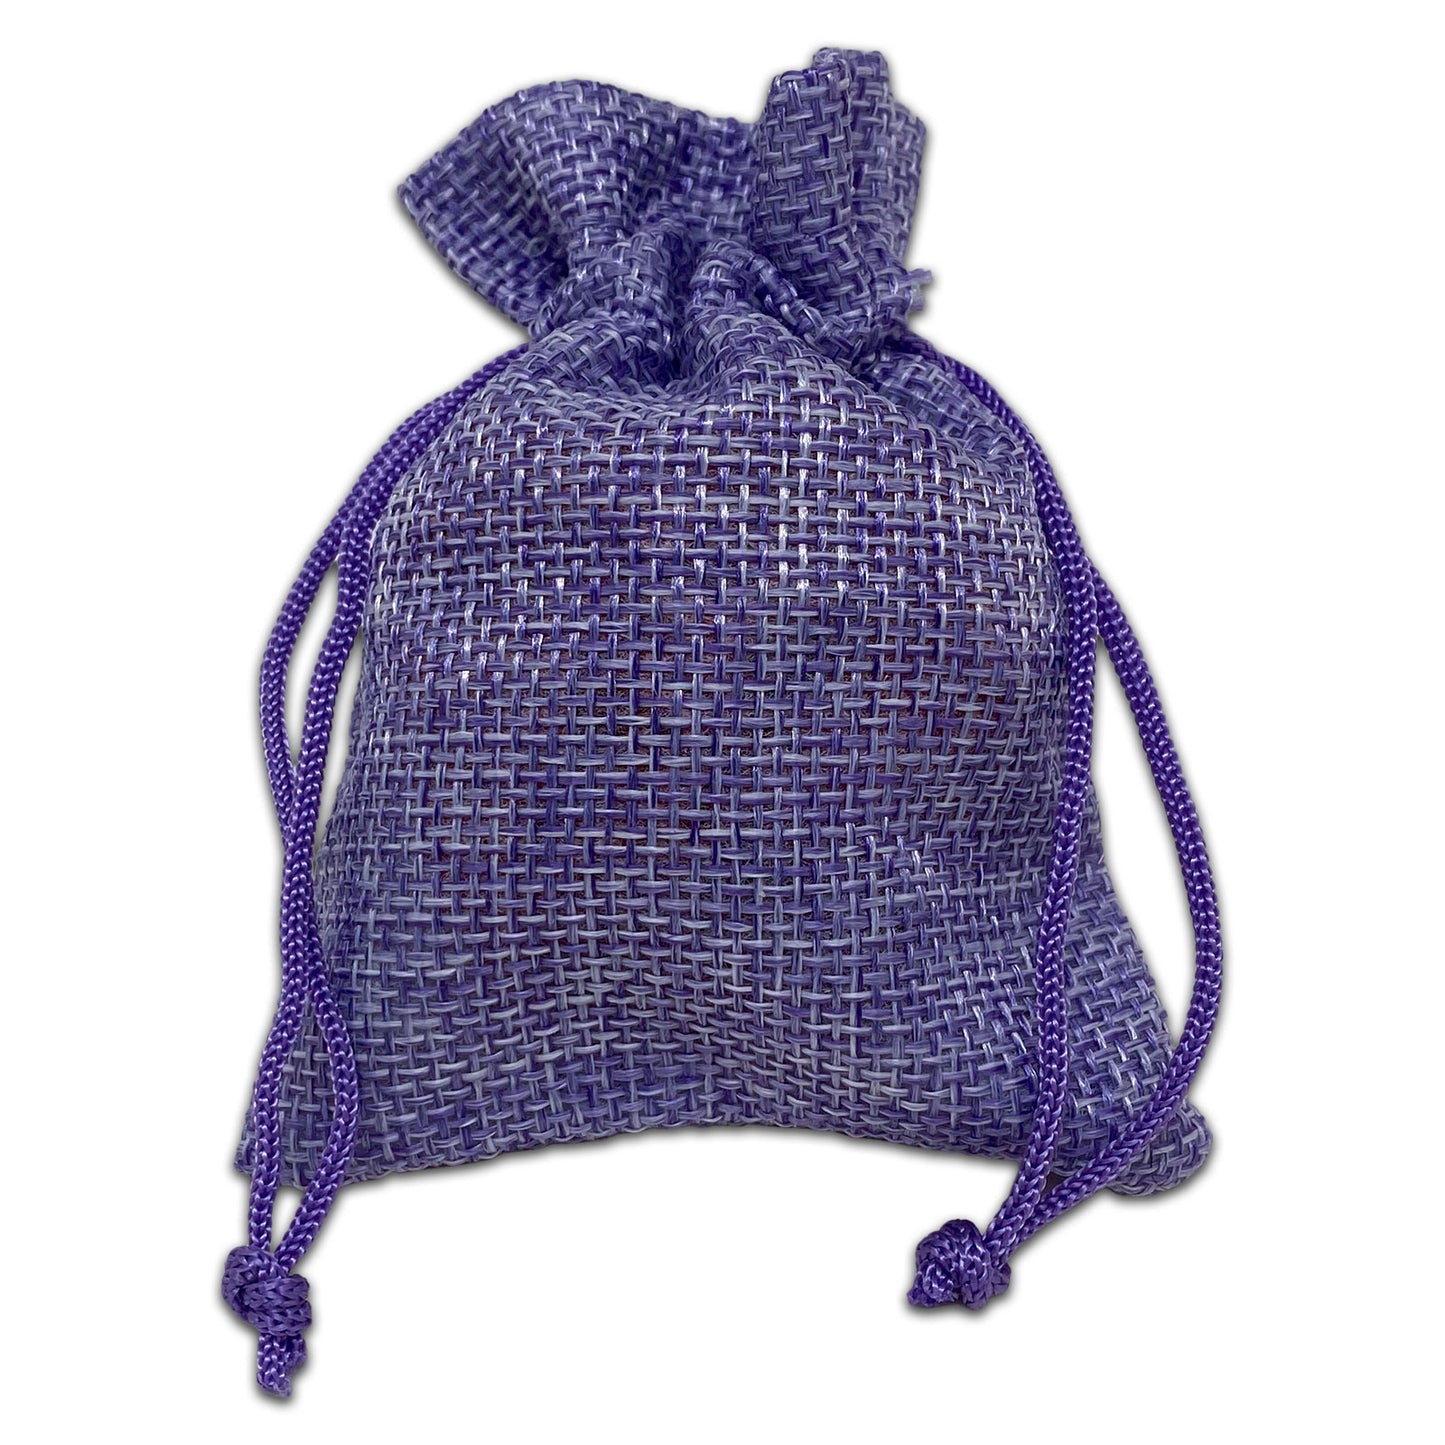 3" x 4" Lavender Linen Burlap Drawstring Gift Bags